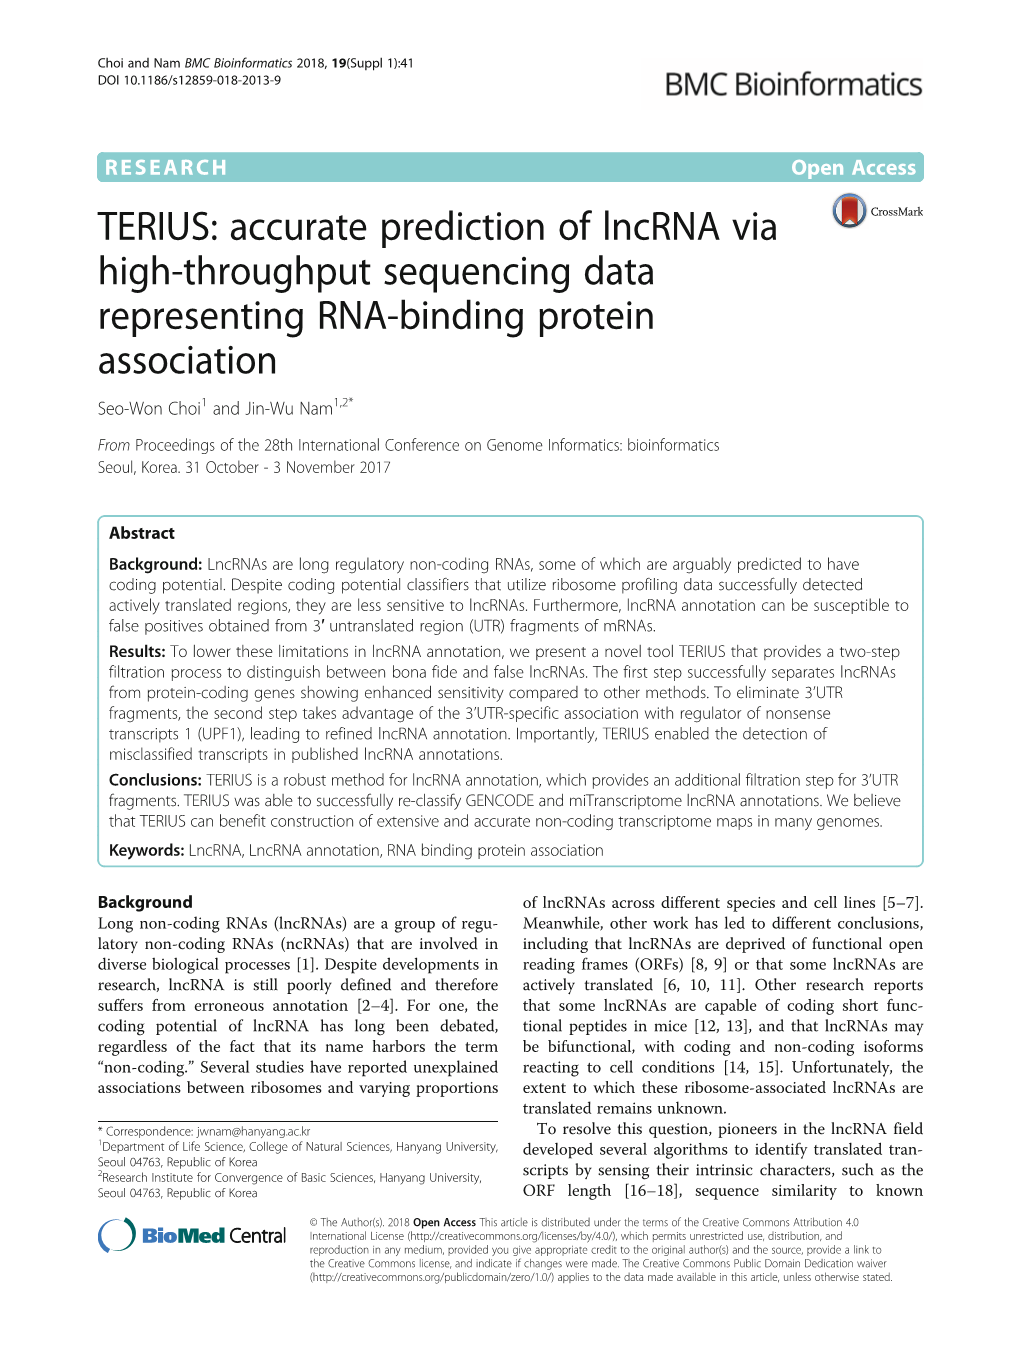 TERIUS: Accurate Prediction of Lncrna Via High-Throughput Sequencing Data Representing RNA-Binding Protein Association Seo-Won Choi1 and Jin-Wu Nam1,2*